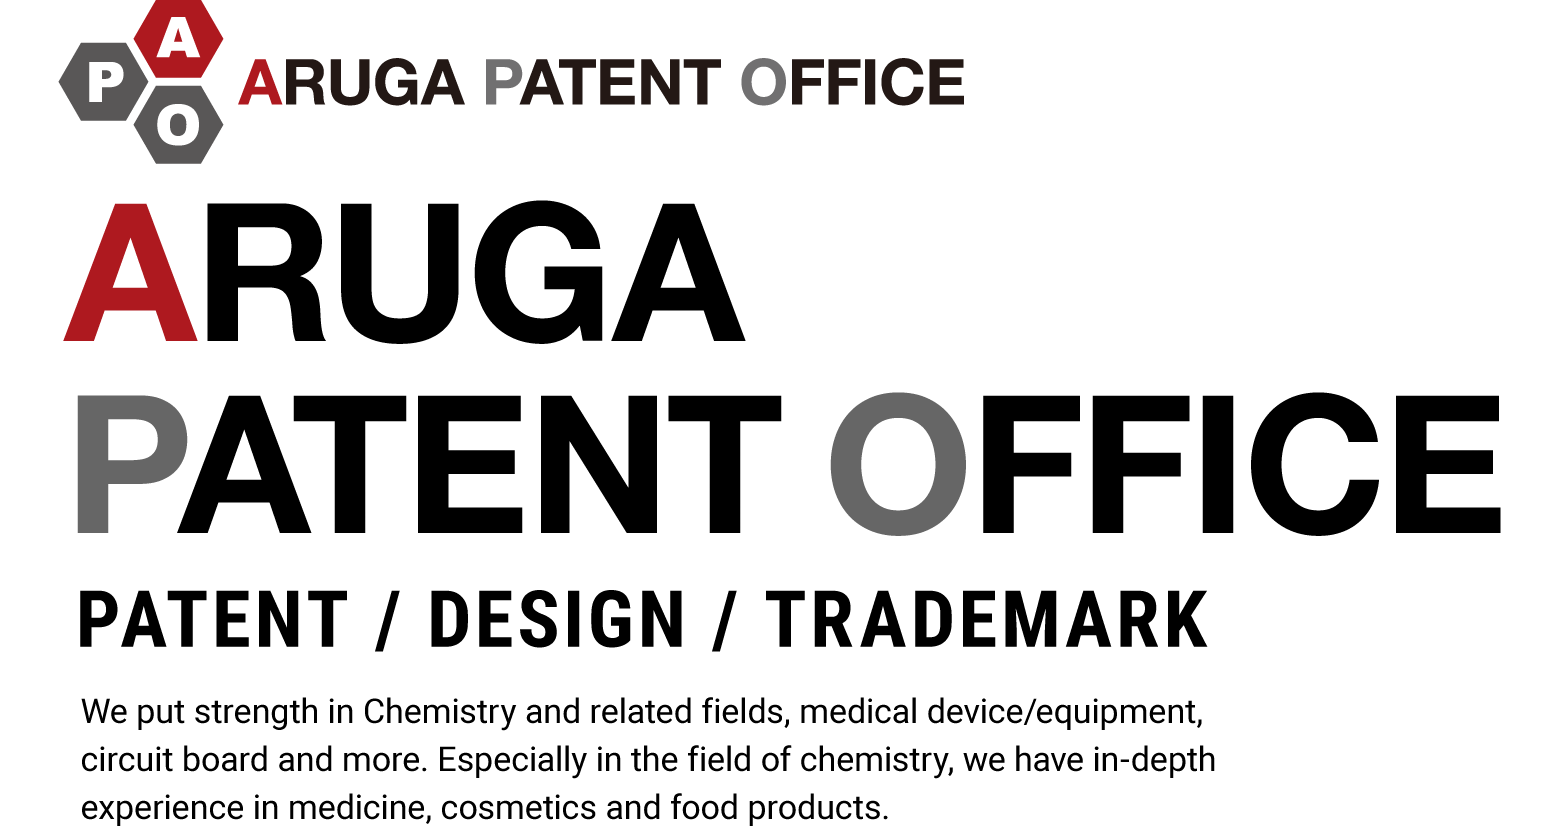 ARUGA PATENT OFFICE